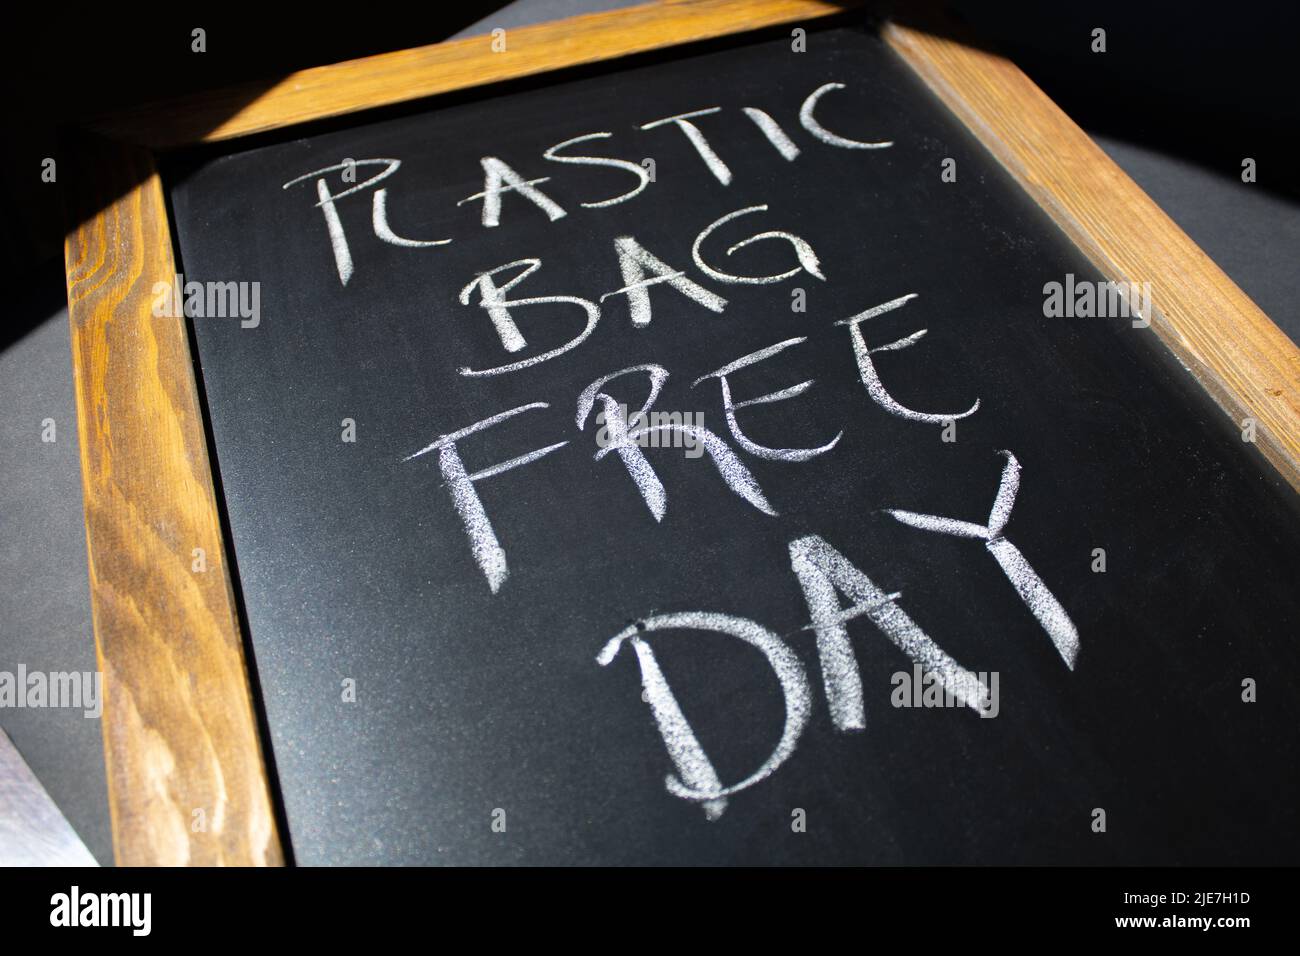 Plastic Bag Free Day is written on Chalkboard Stock Photo